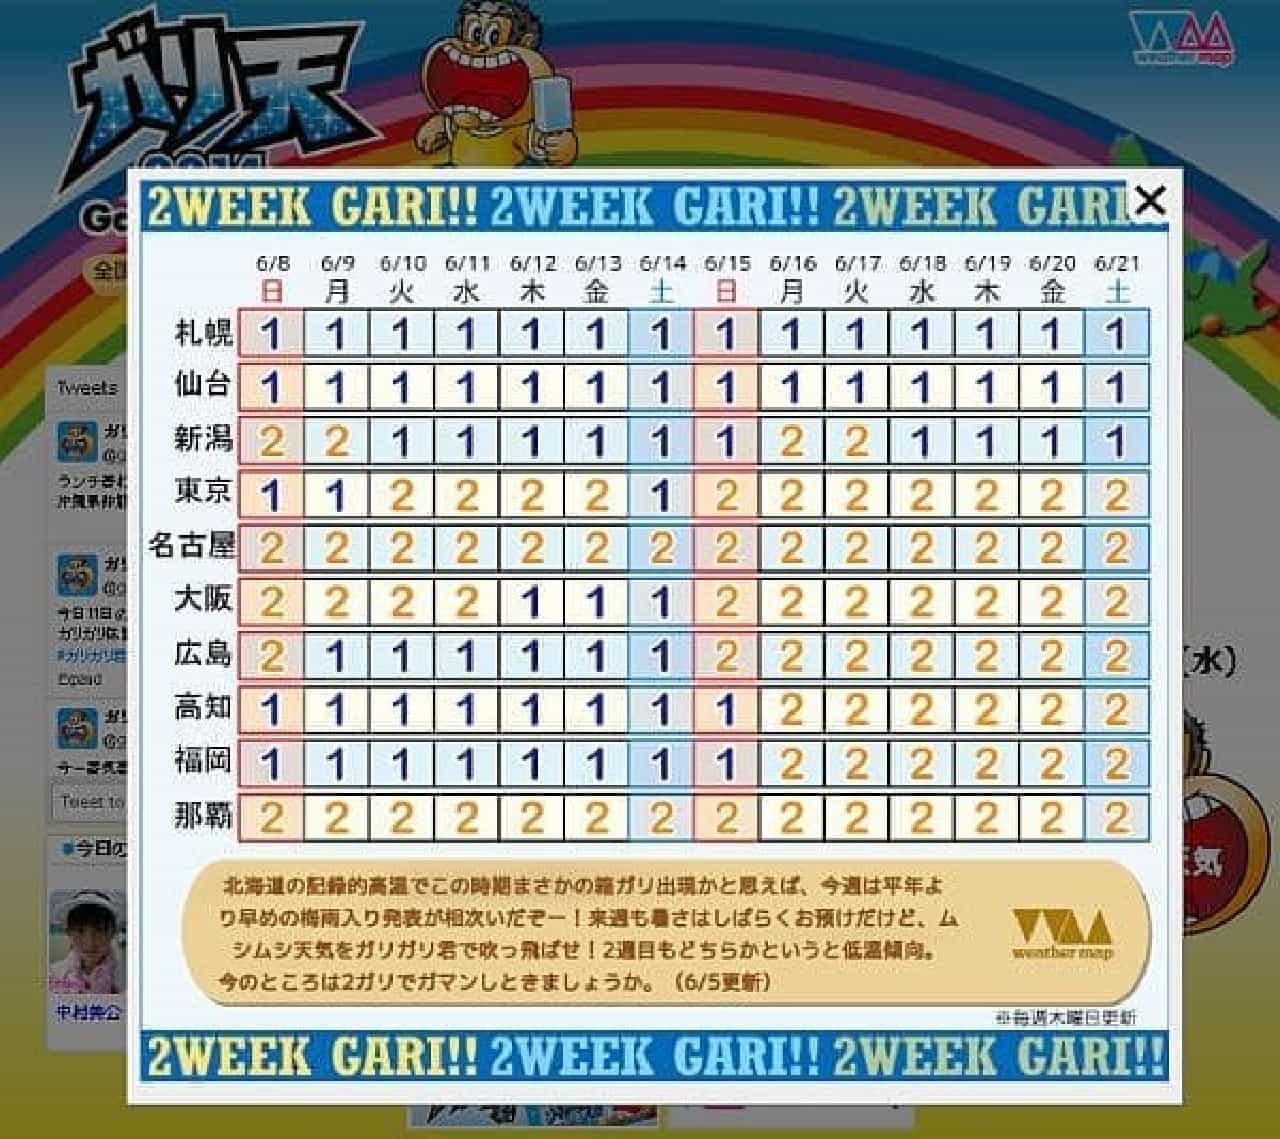 Let's stock up on Gari-Gari-kun with reference to the Gari-Gari Index for 2 weeks